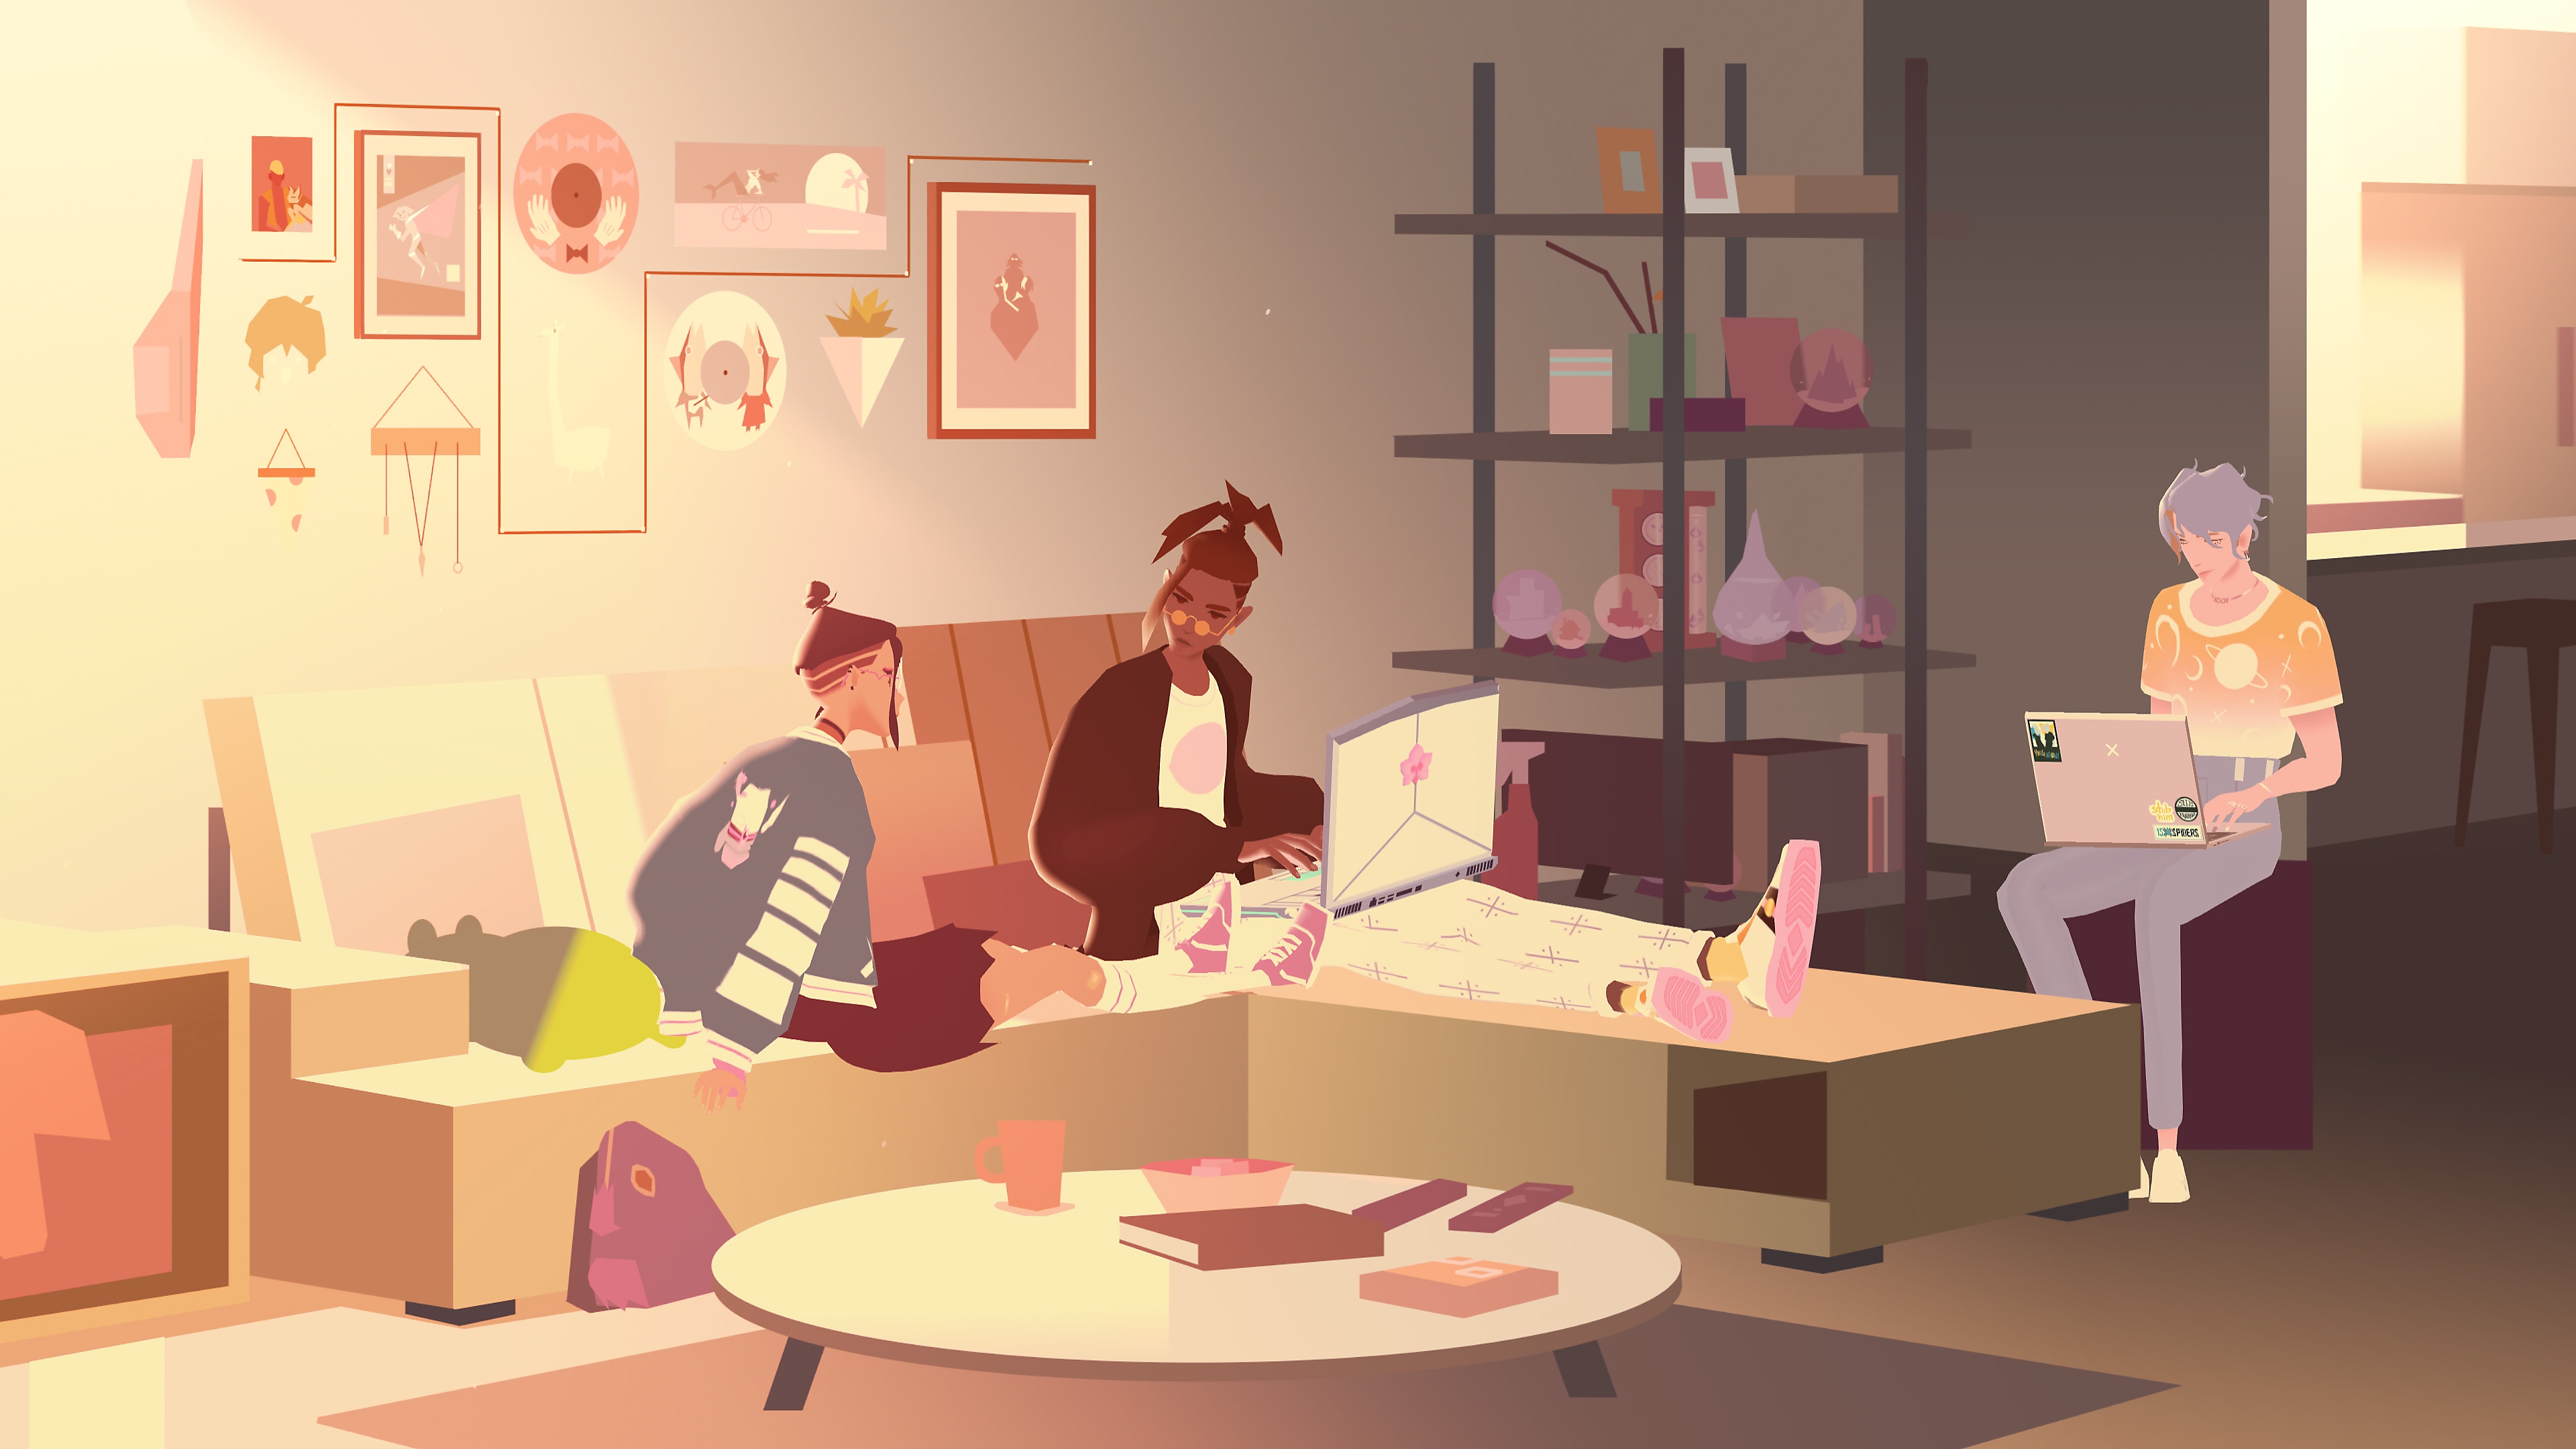 Snimka zaslona iz igre We Are OFK prikazuje tri lika u dnevnoj sobi